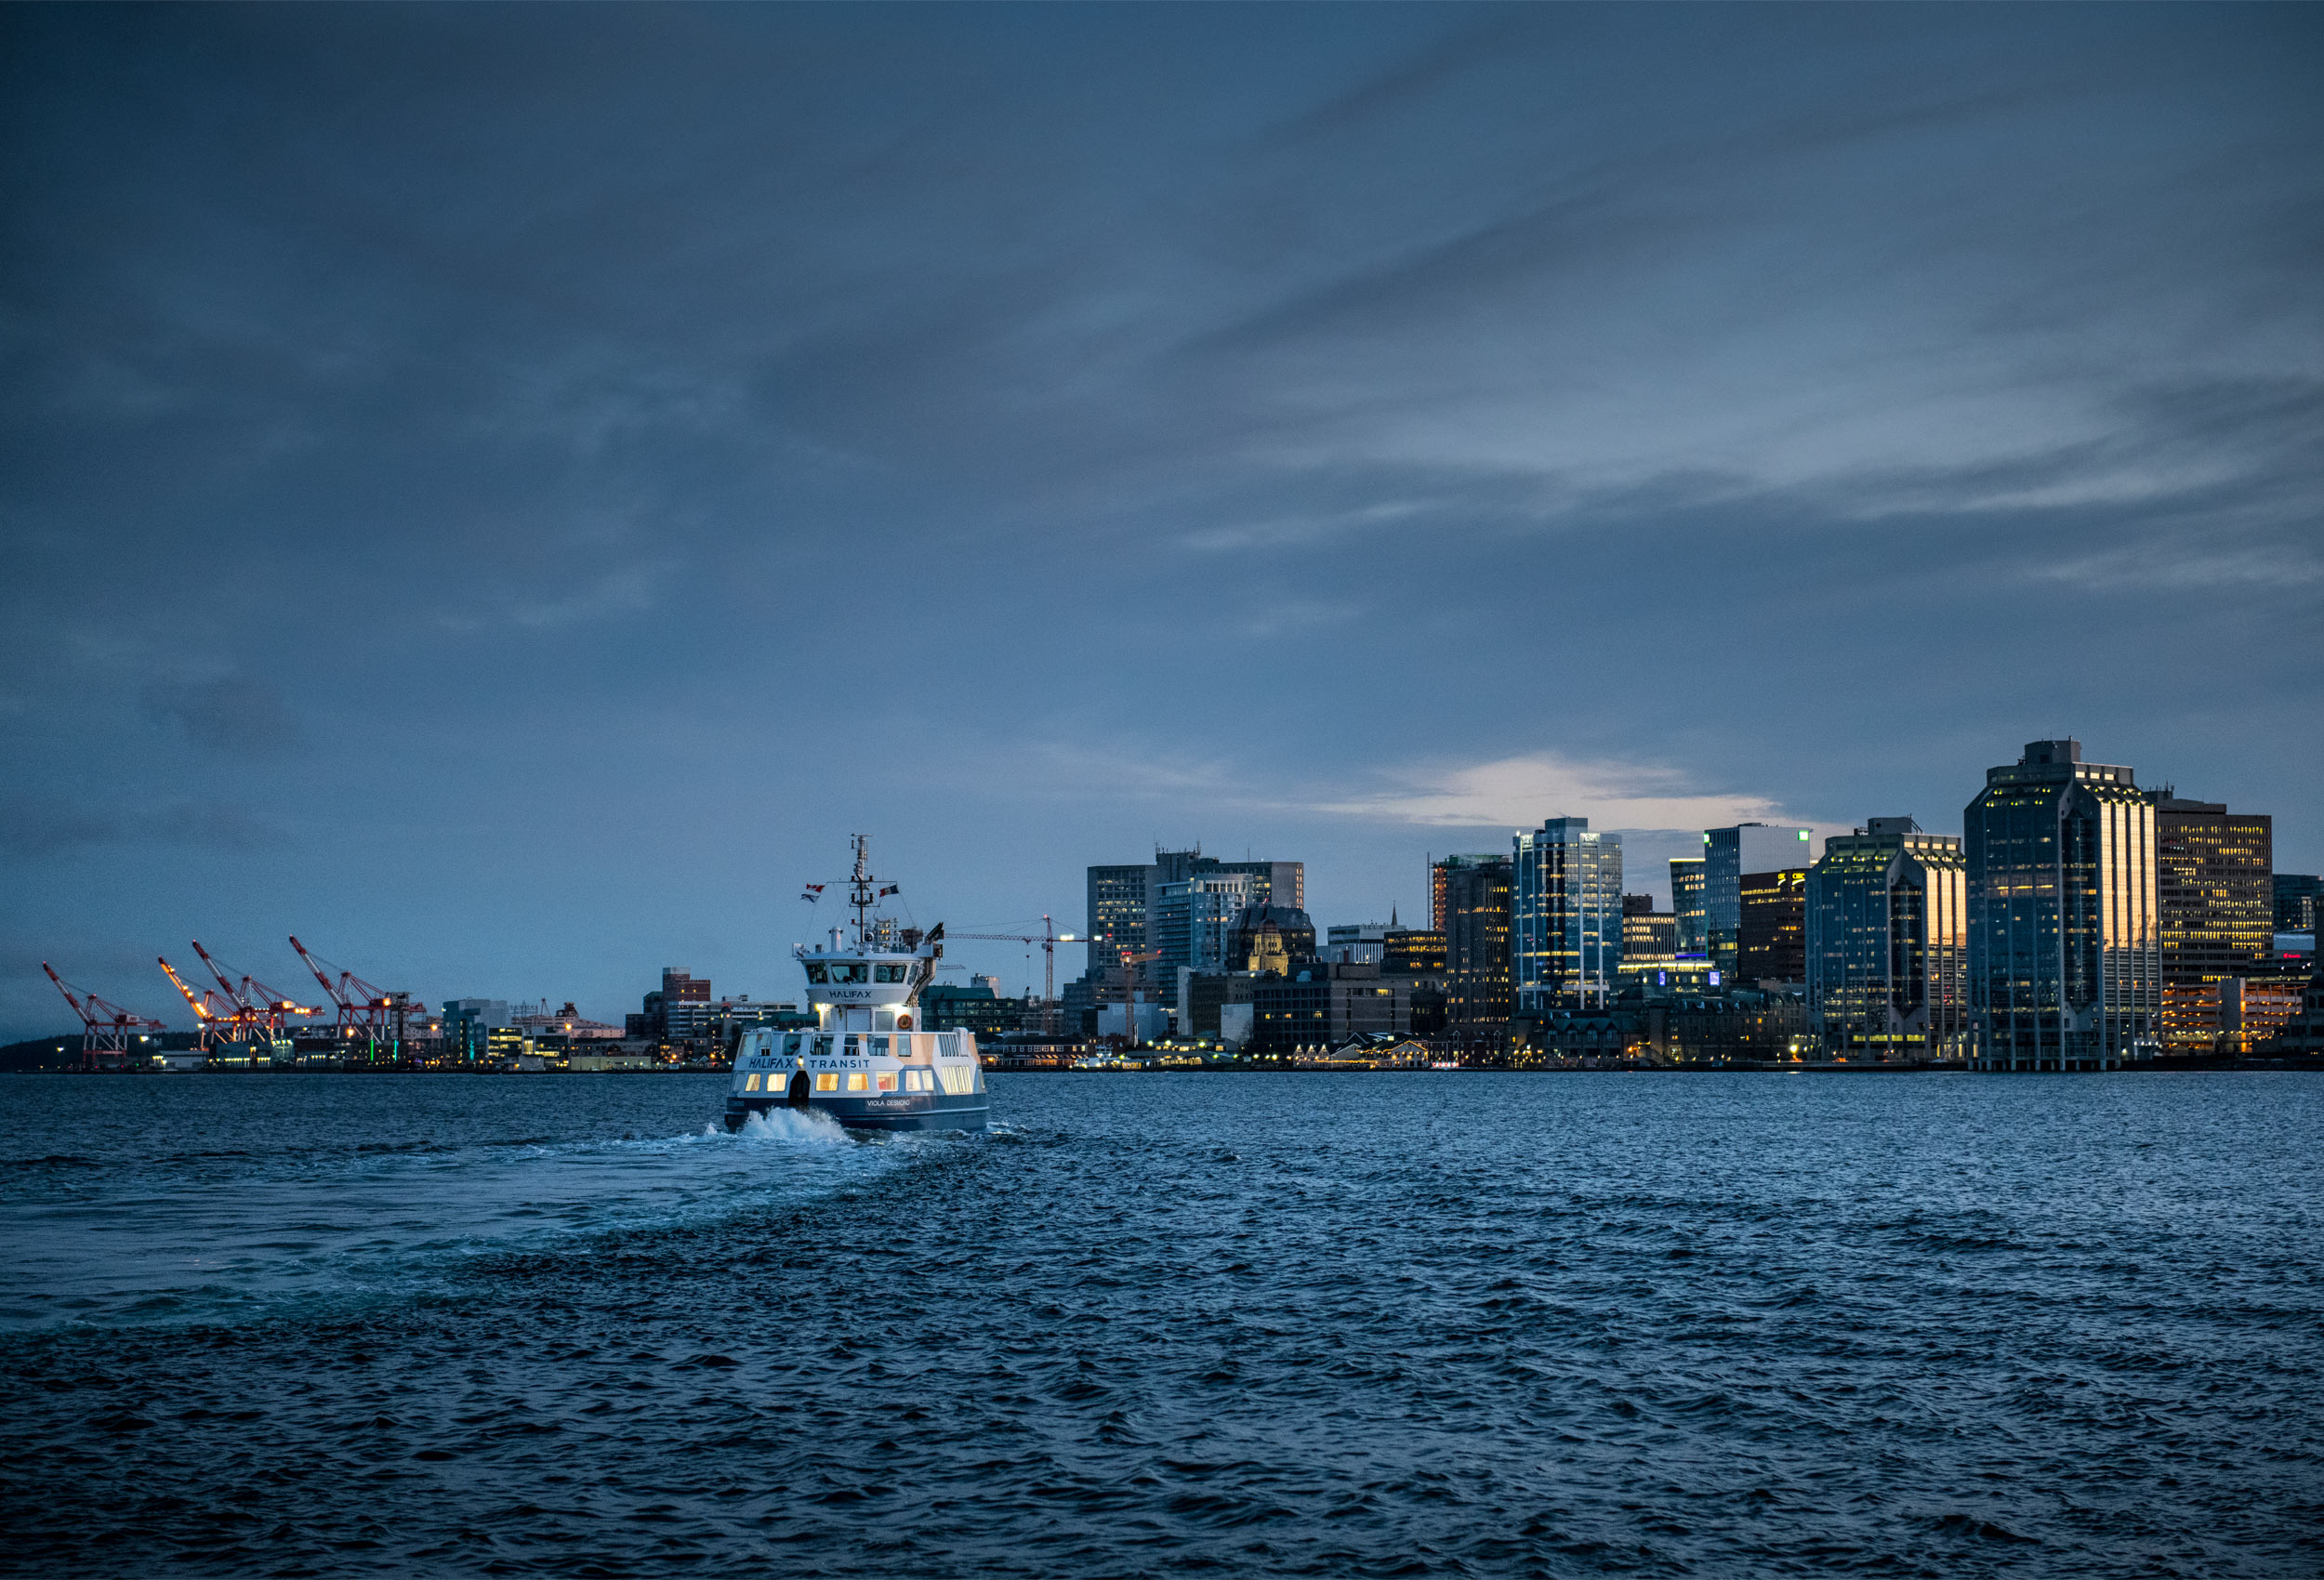  Halifax transportation by cityscape photographer Kristopher Grunert